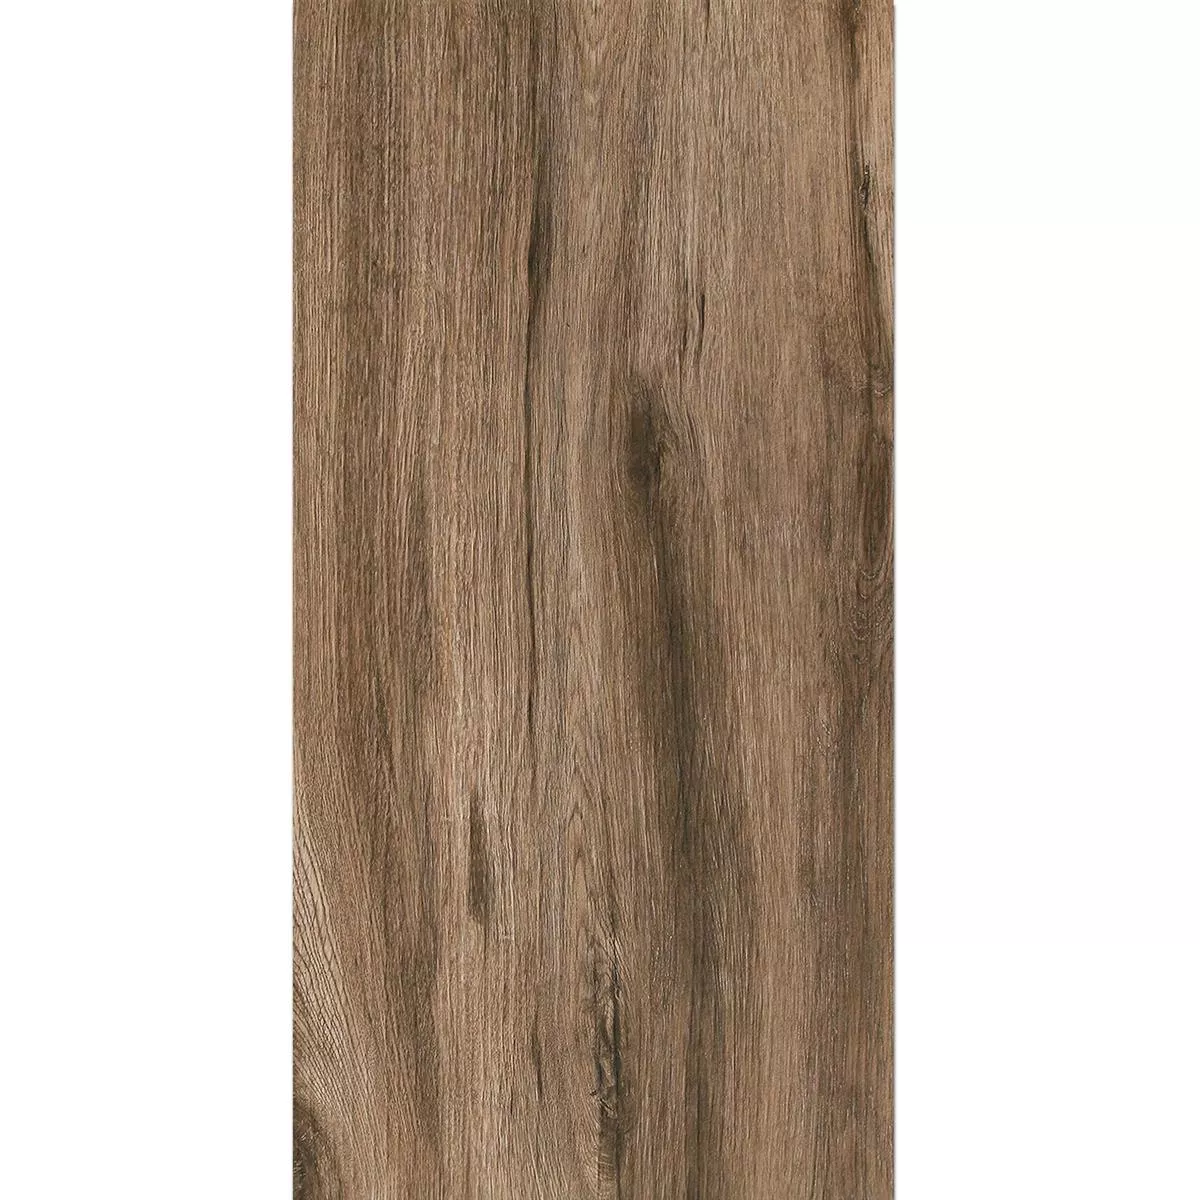 Próbka Taras Płyta Starwood Wygląd Drewna Ebony 45x90cm